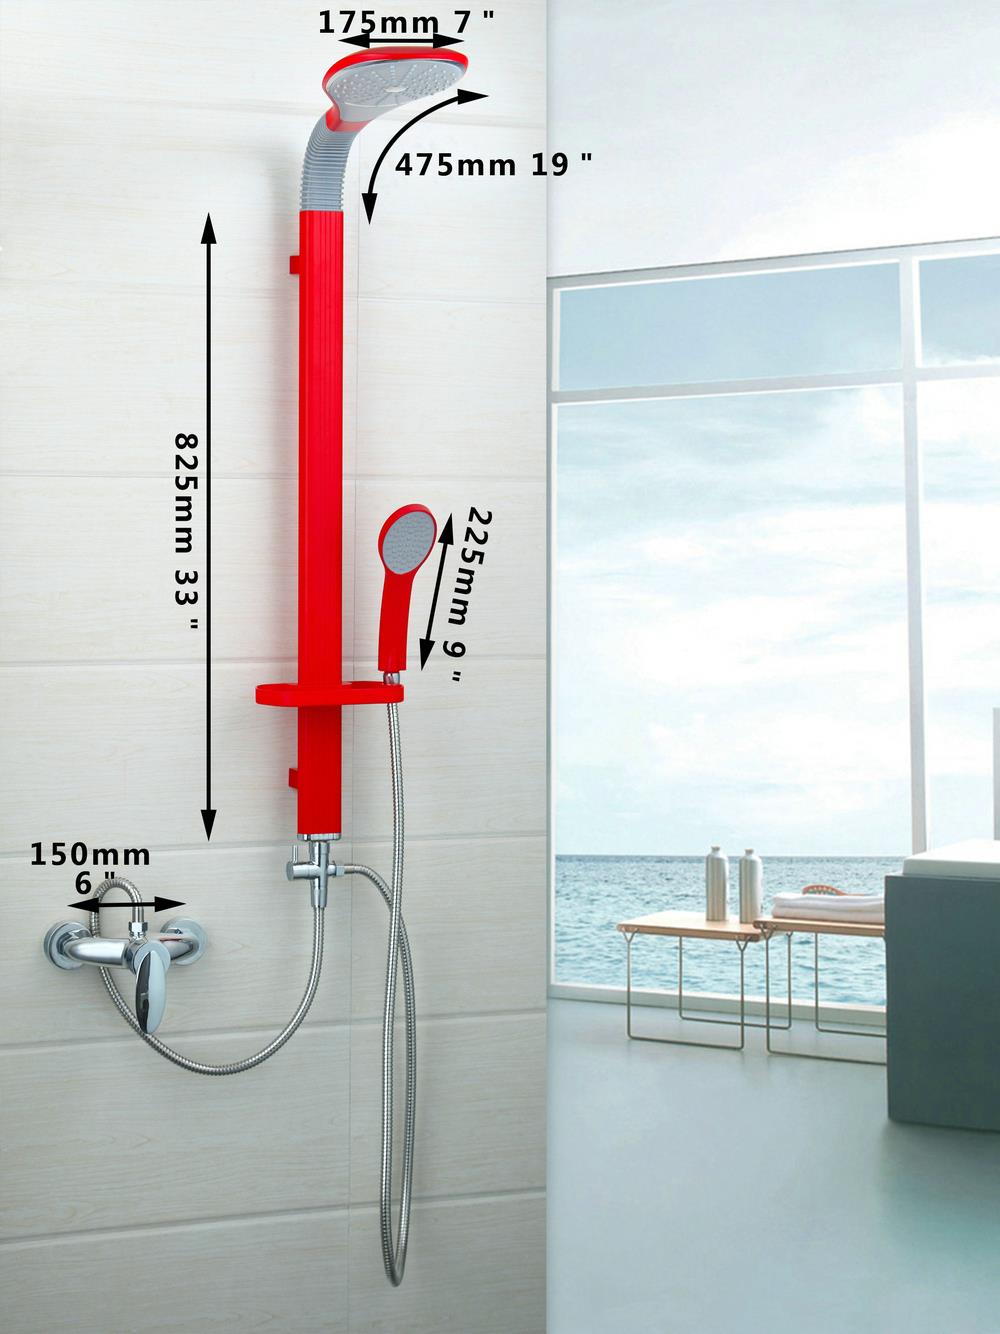 hello new arrival 50254/0 bathroom rain shower chuveiro do banheiro wall mounted painting finish with hand held shower